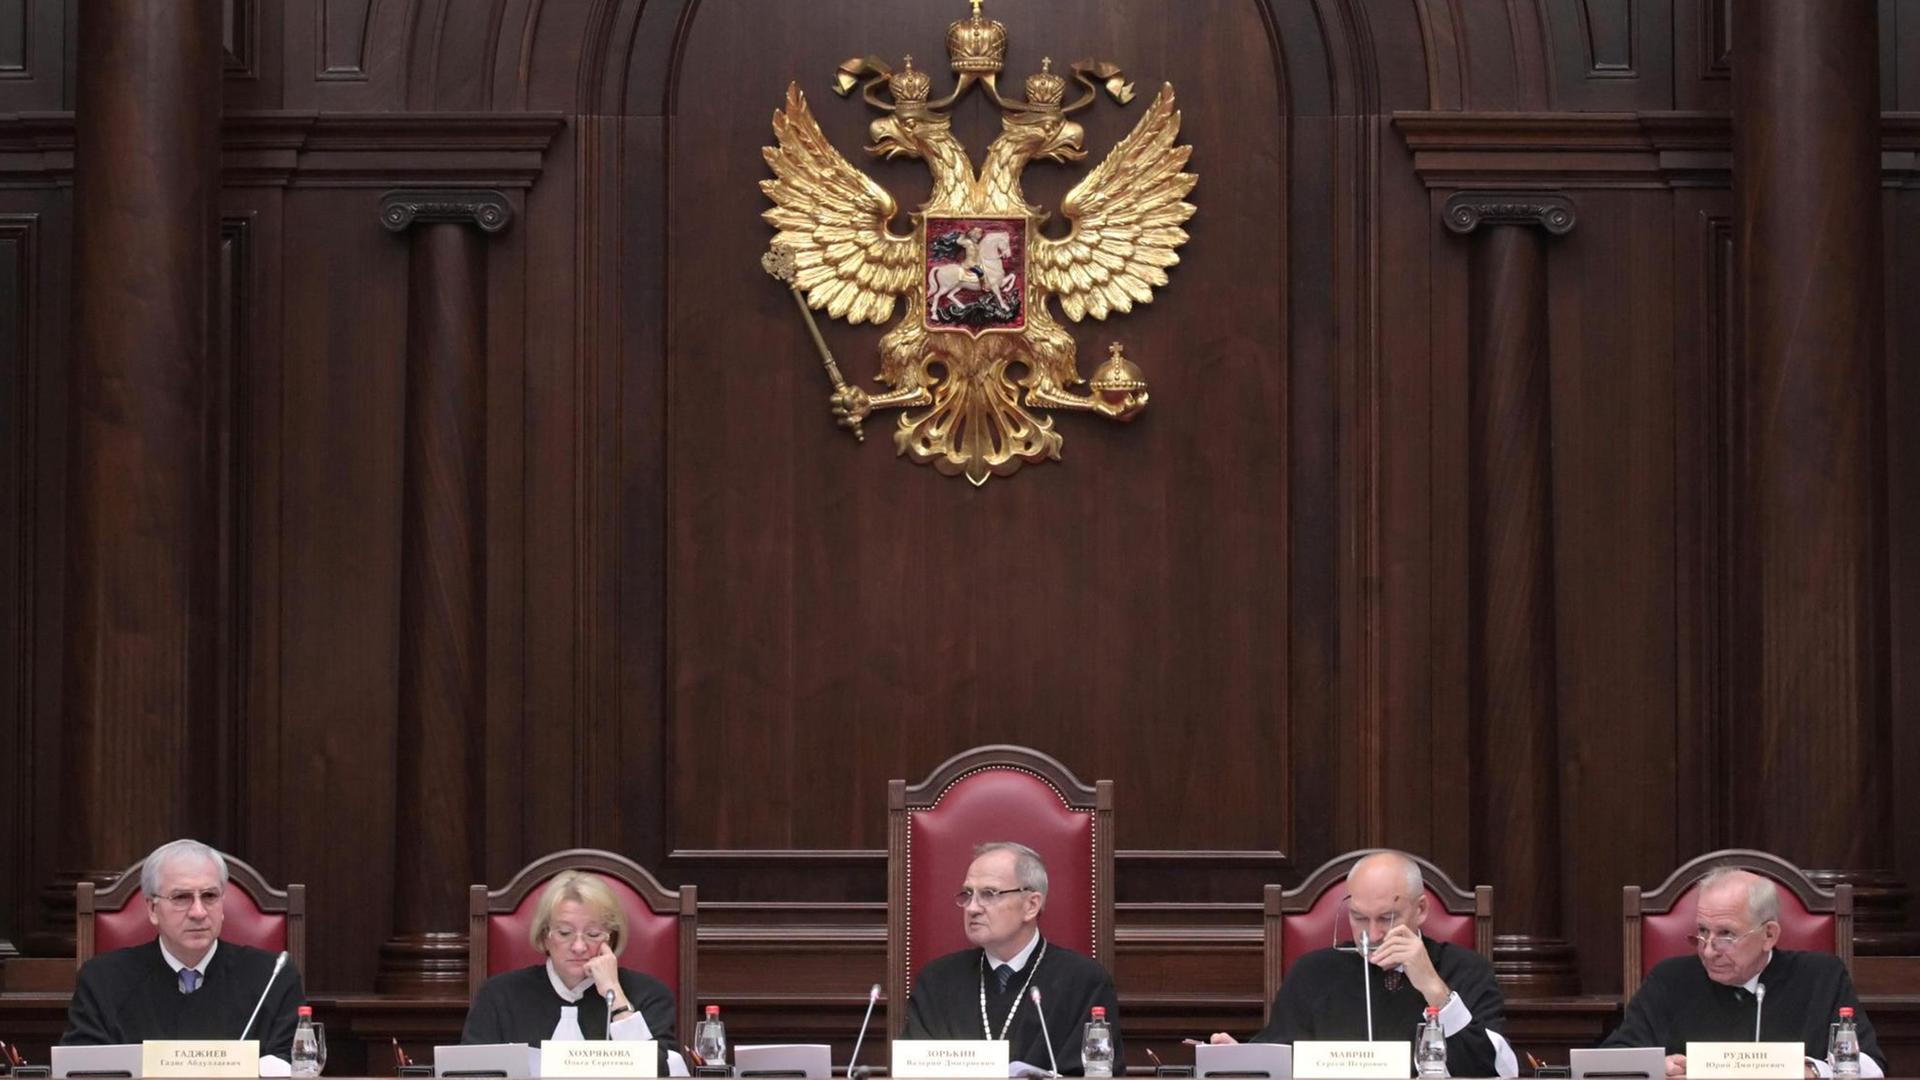 From left: Constitutional Court Judges Gadis Gadjiyev, Olga Khokhryakova, Valery Zorkin (Chairman), Sergei Mavrin and Yury Rudkin attending a court session in St. Petersburg on 11.10.2011.